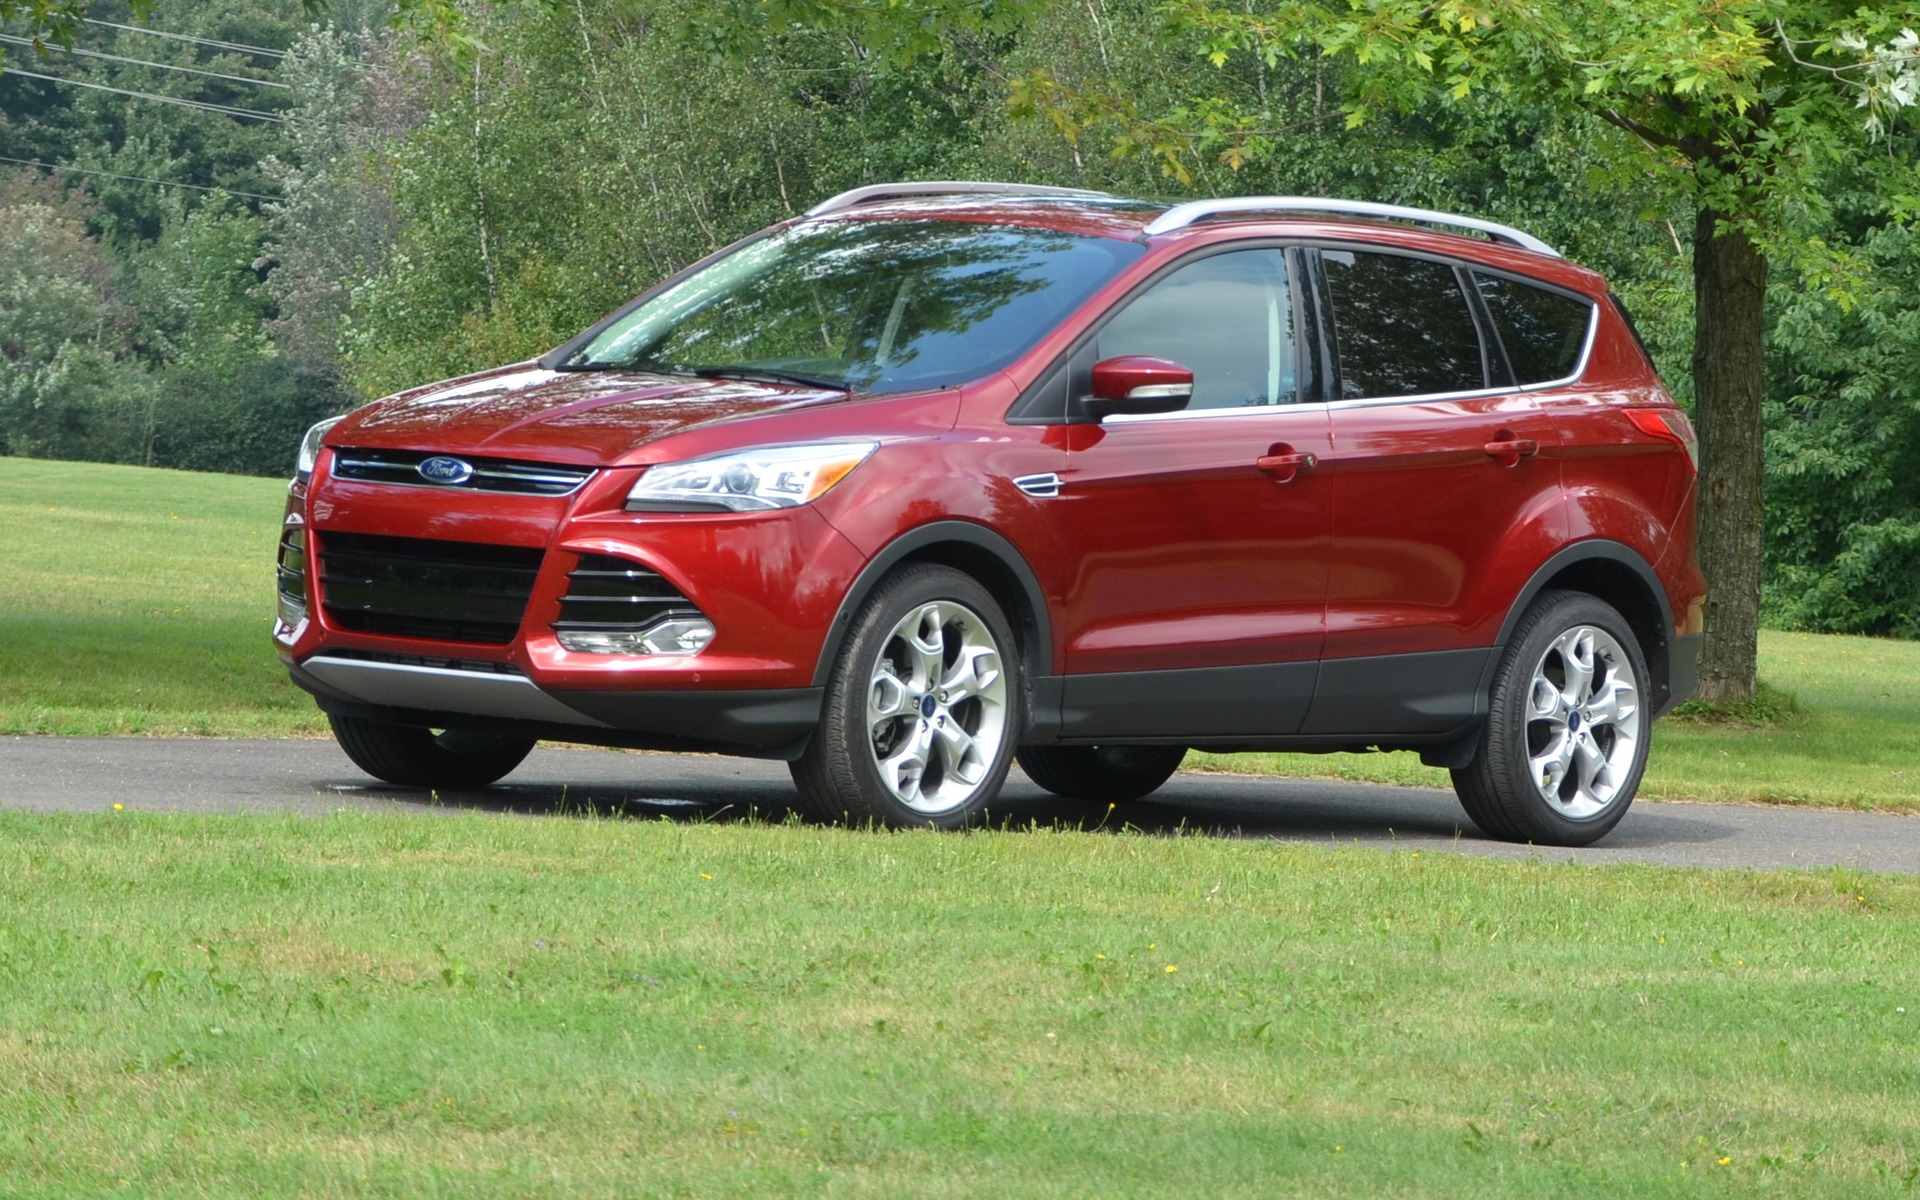 Le Ford Escape, le VUS compact le plus vendu au Canada